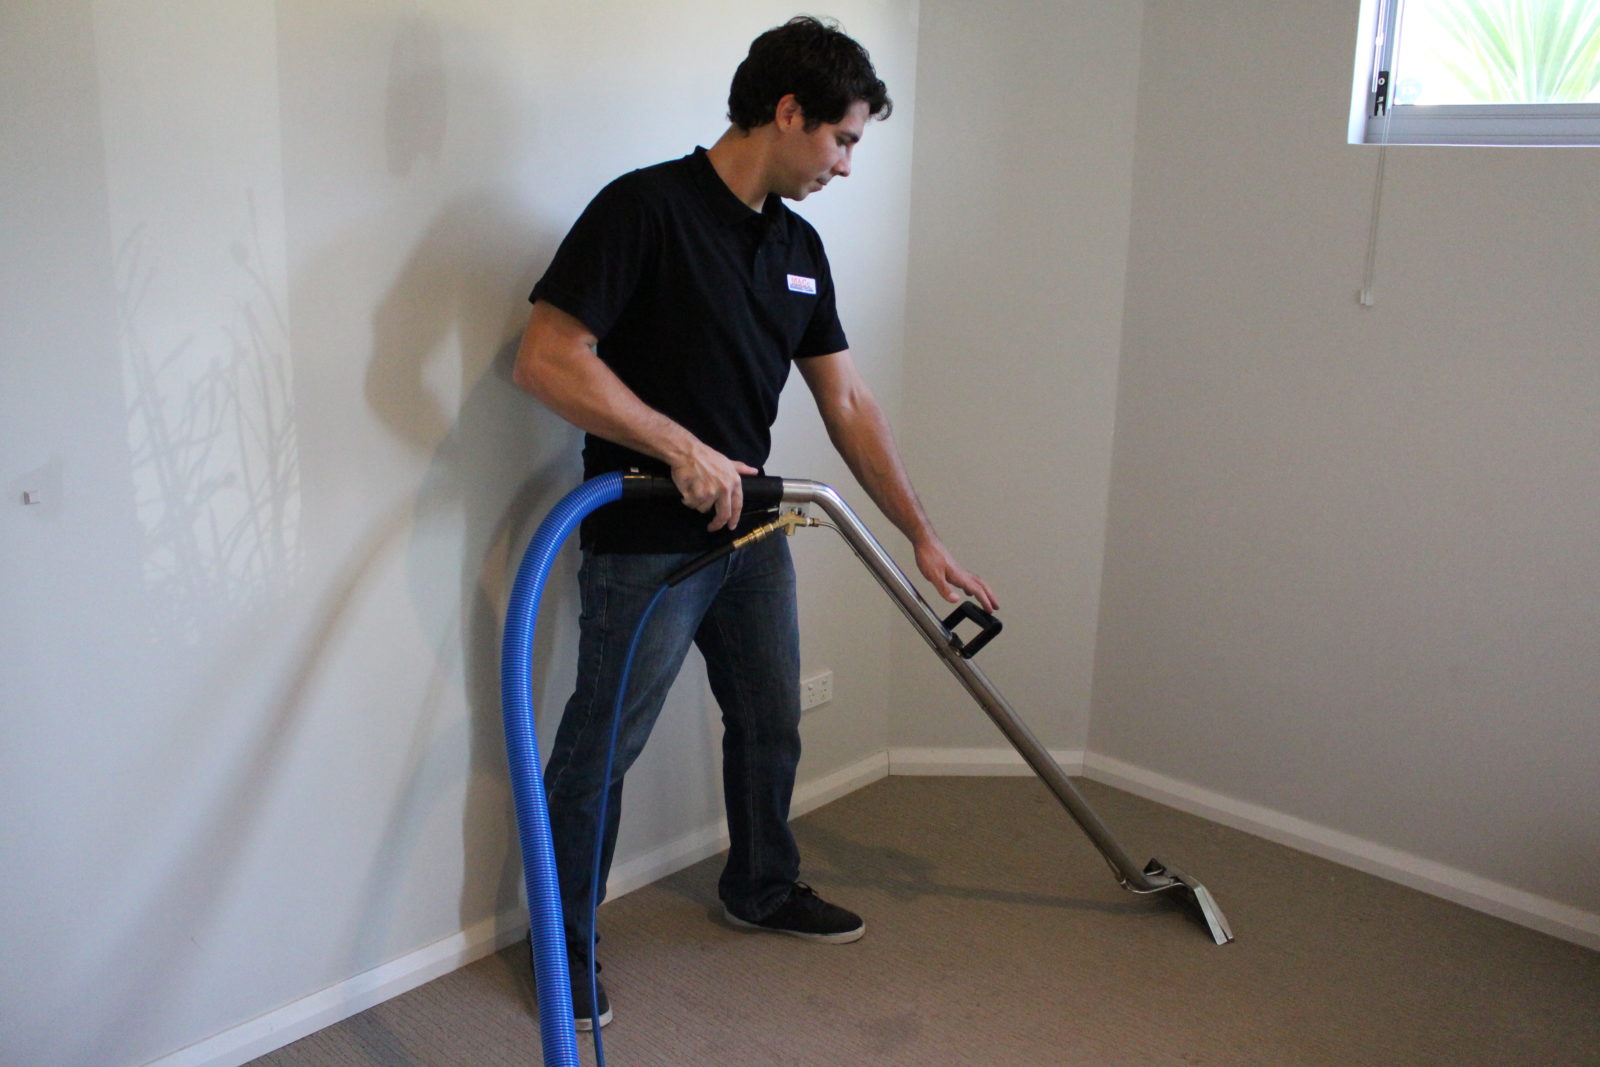 M&Co Carpet Cleaning Services Australia